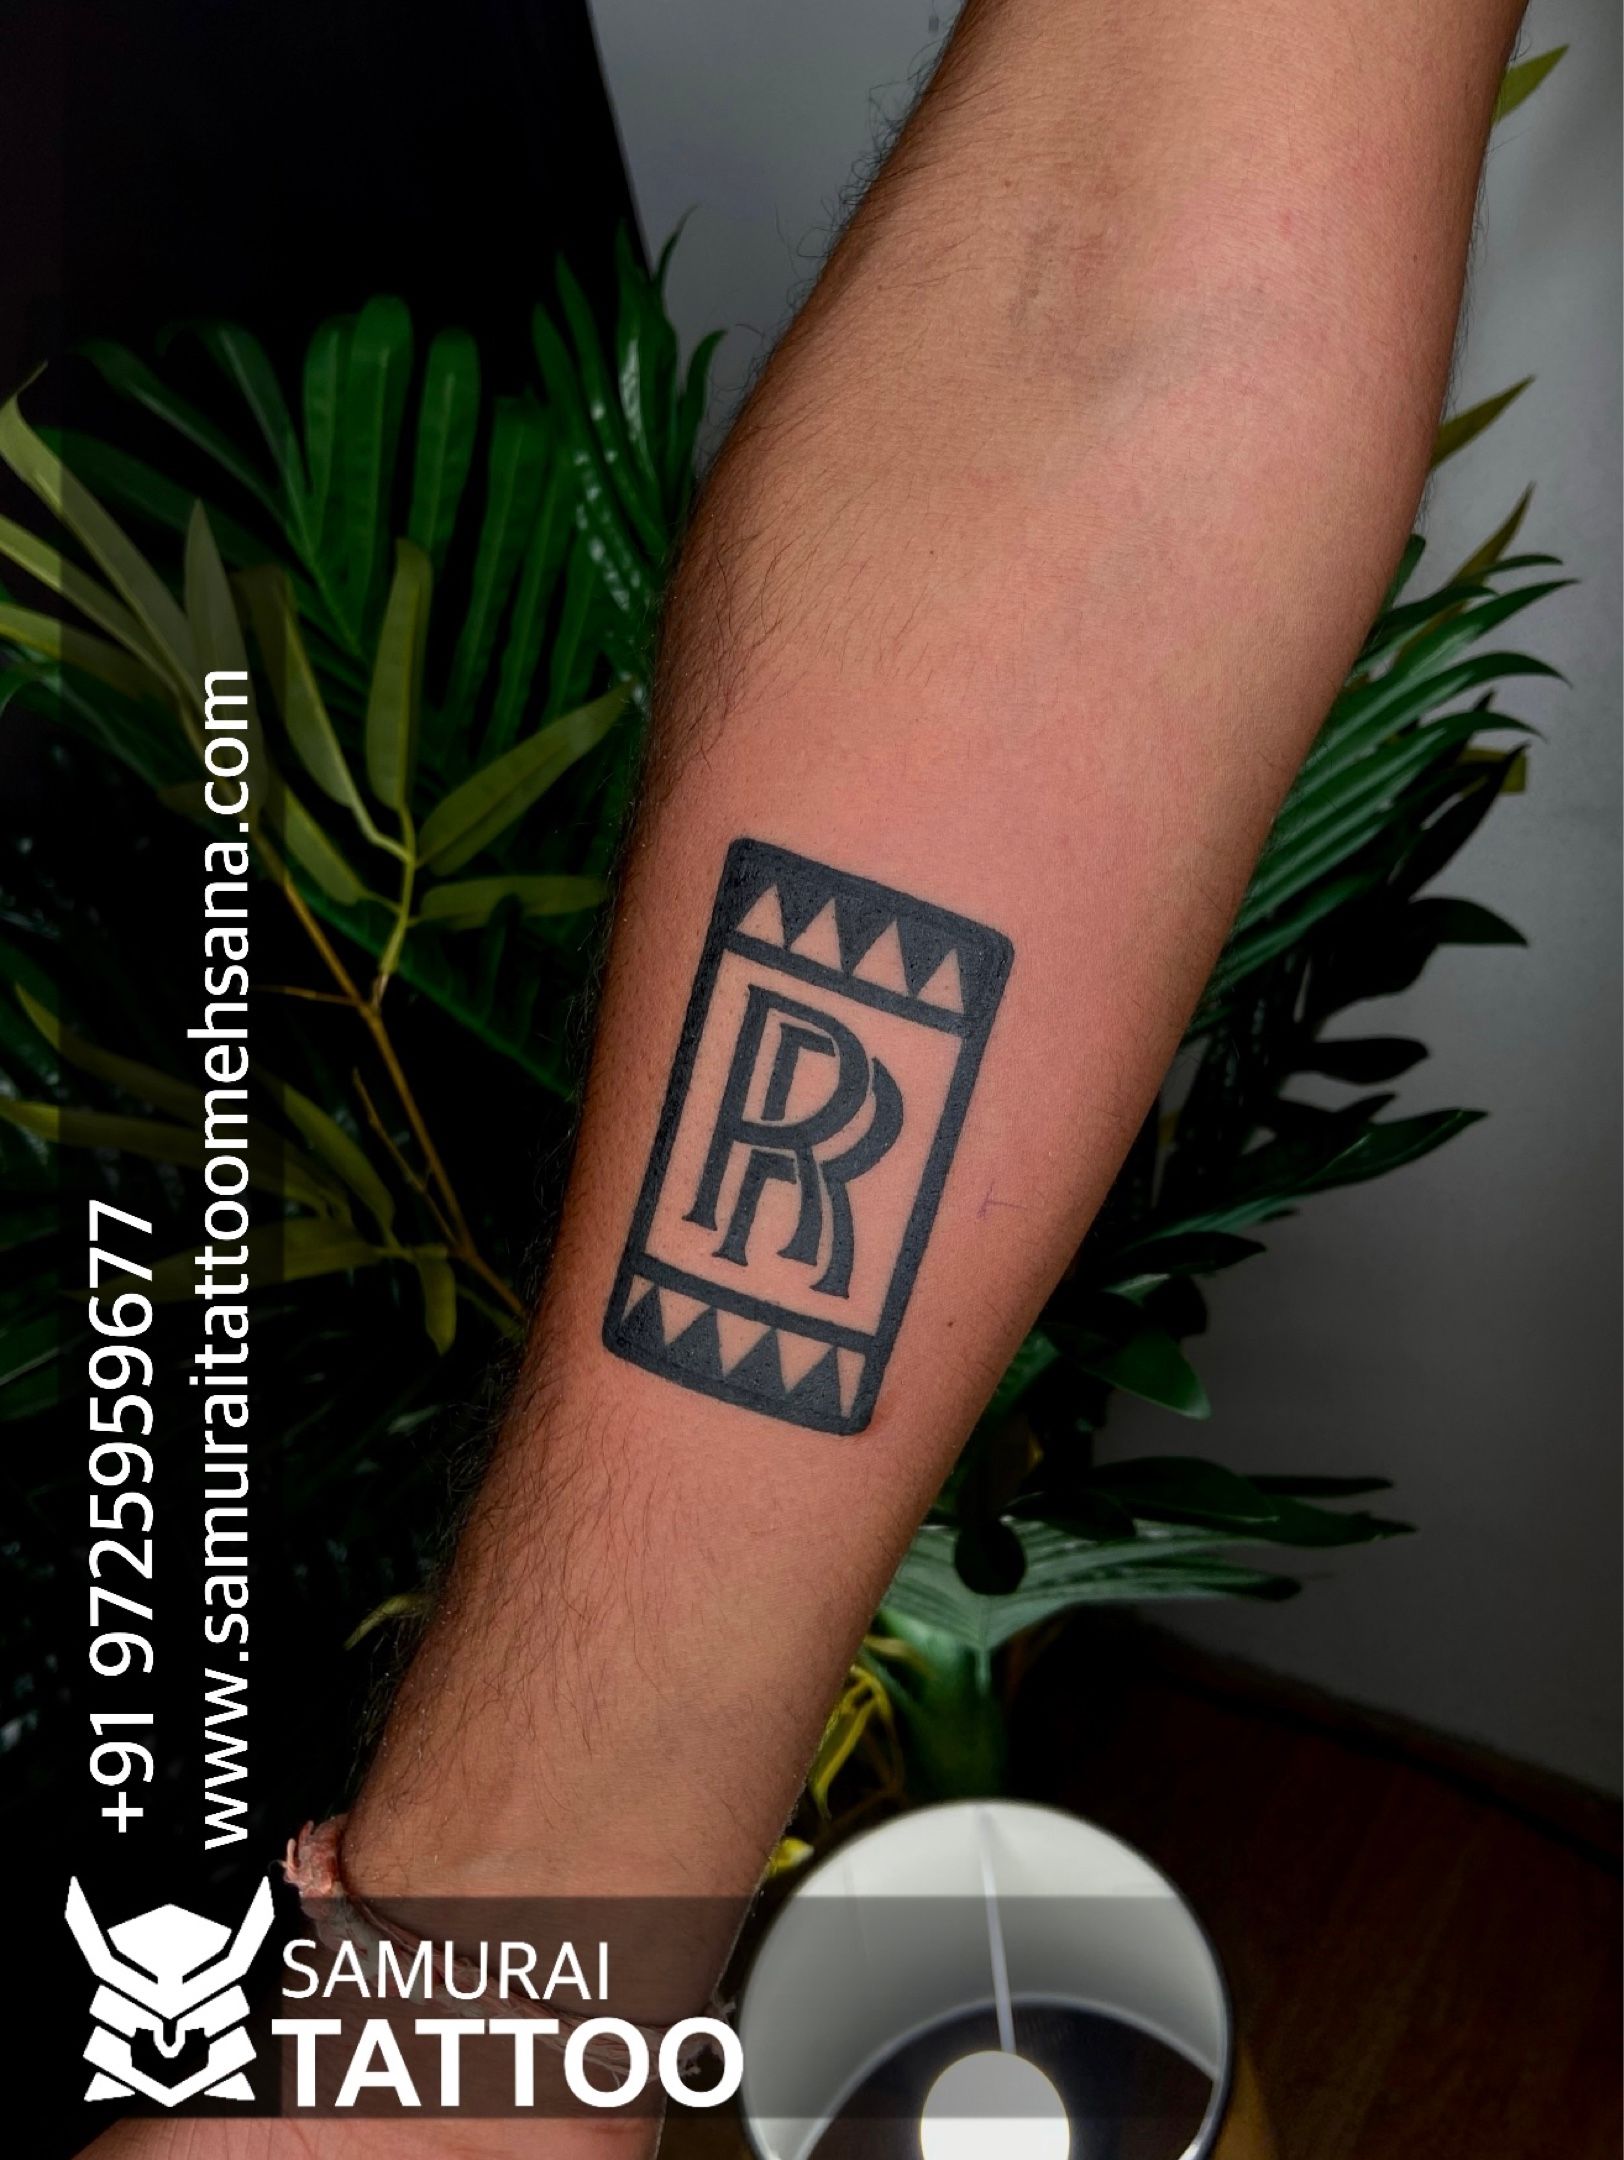 R1 Tattoo Studio updated their cover photo. - R1 Tattoo Studio